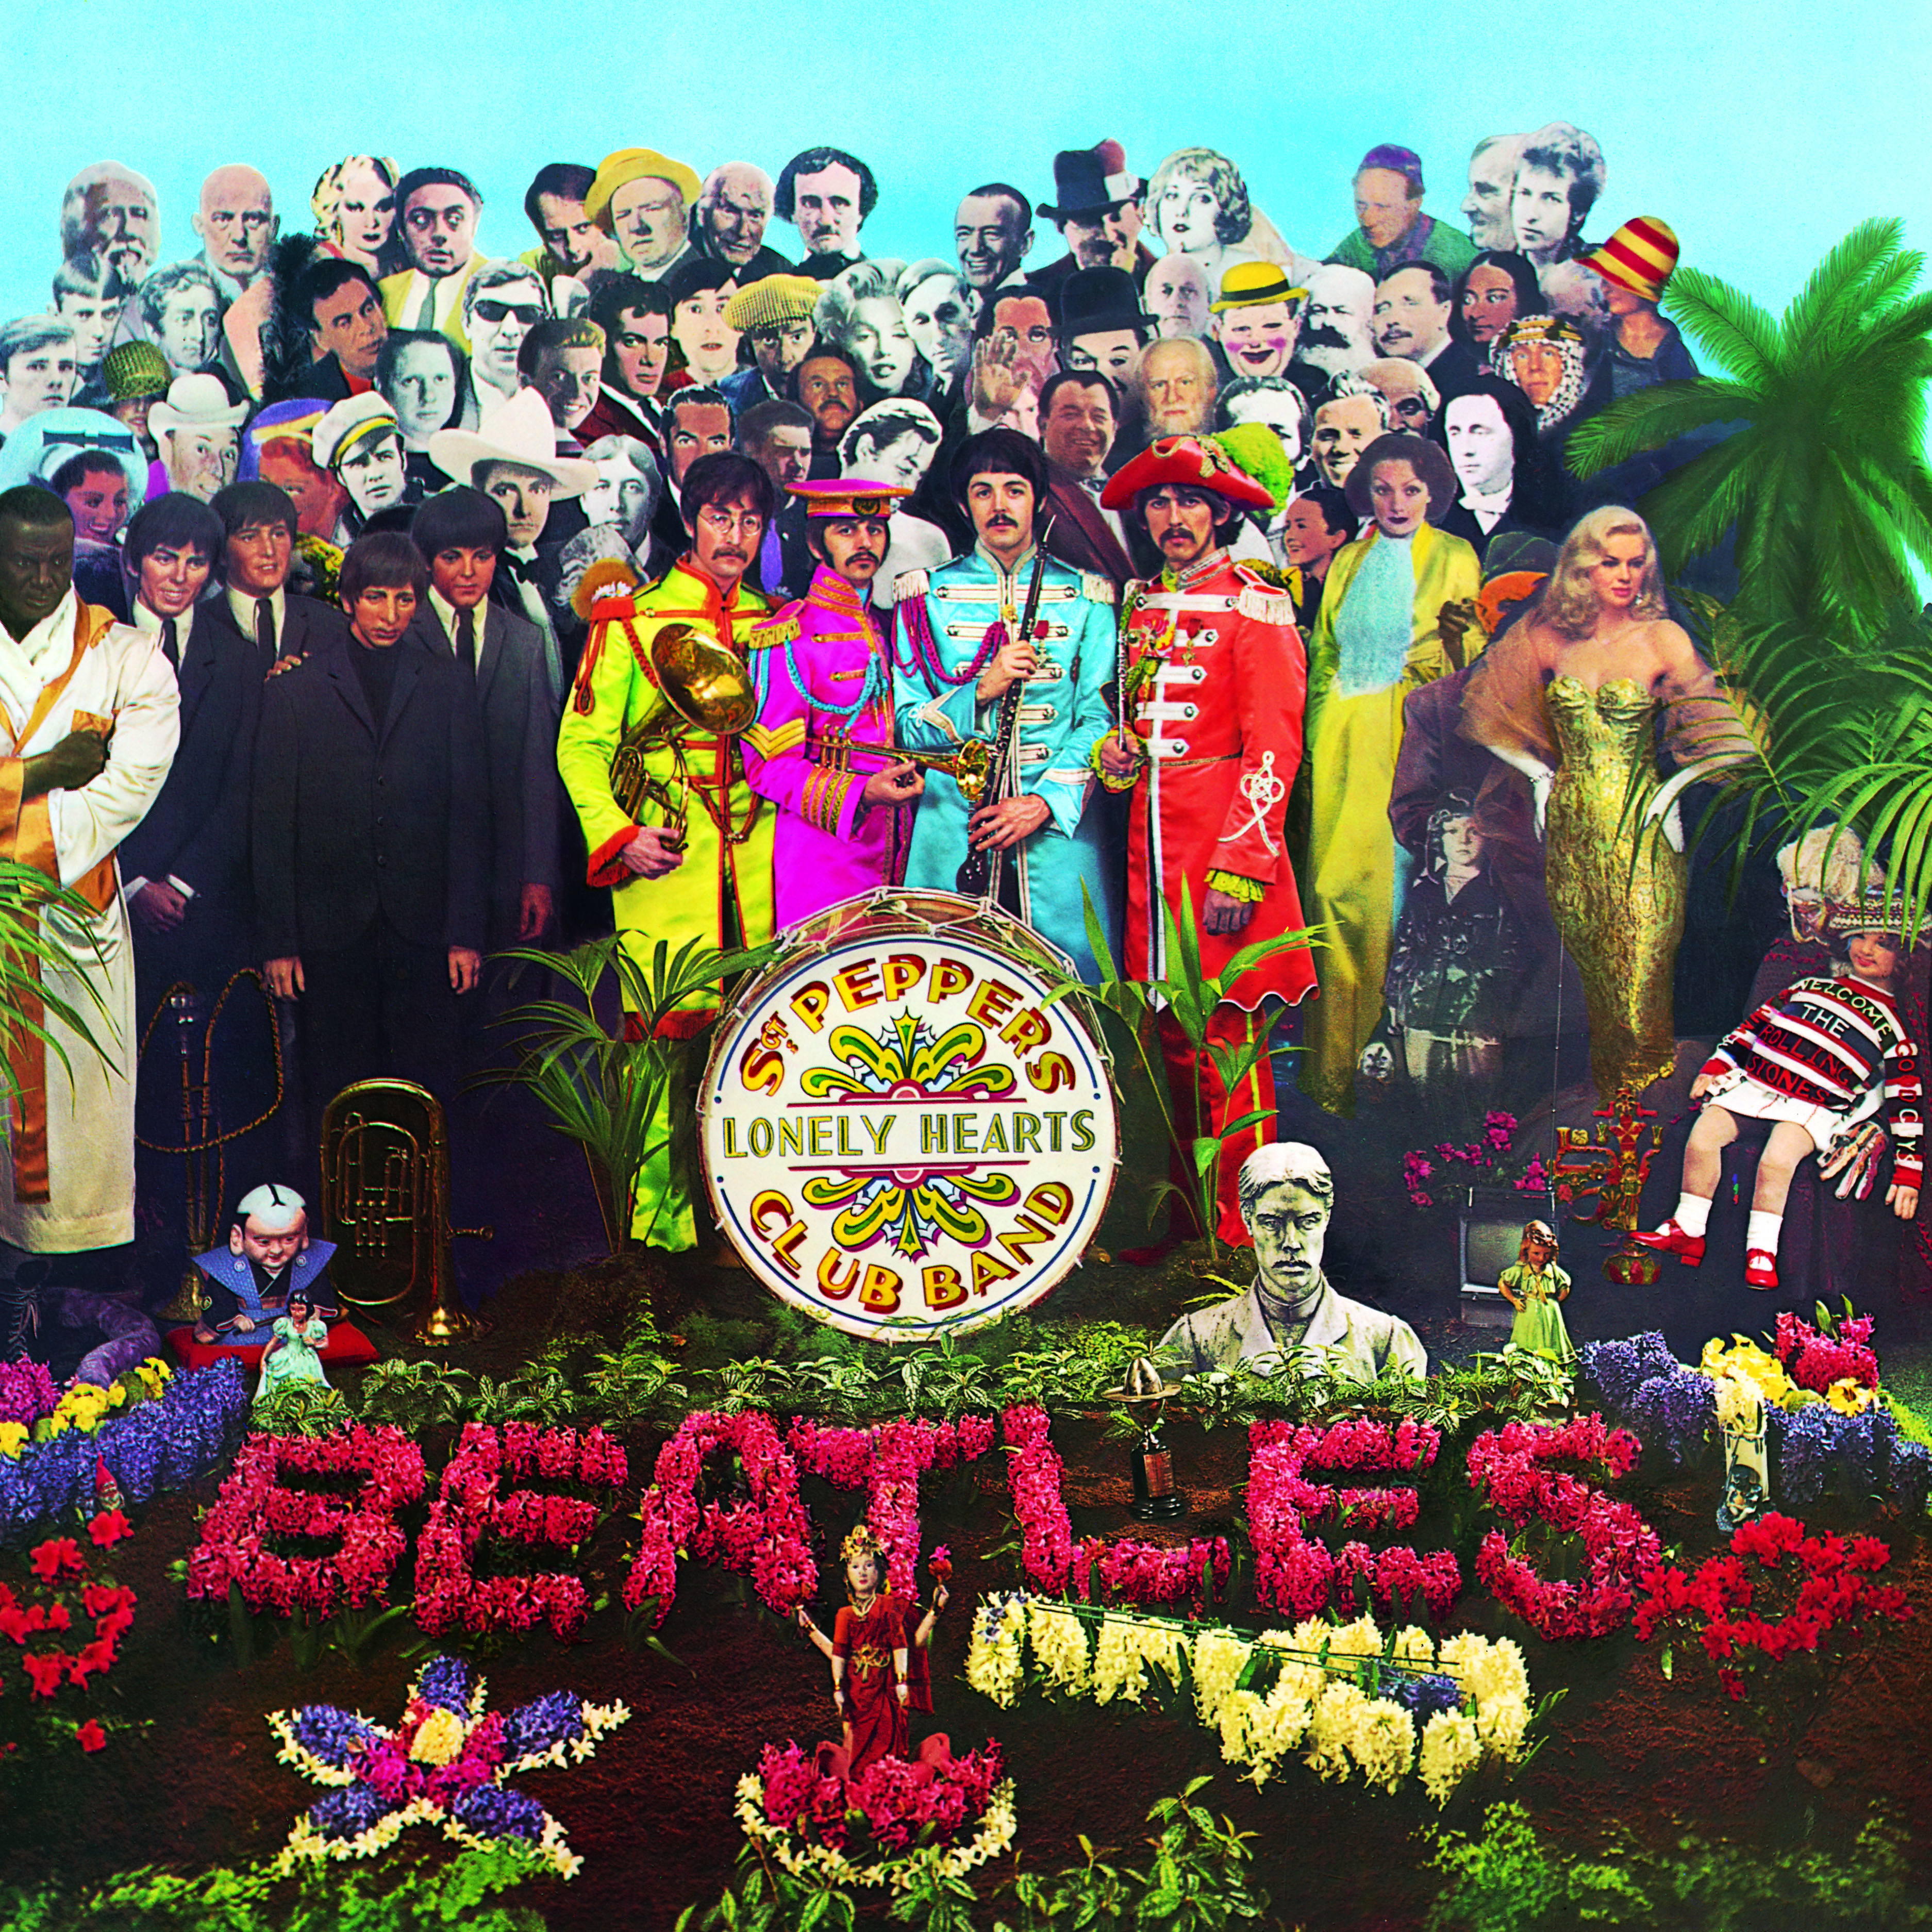 Beatles sgt peppers lonely hearts club. Битлз сержант Пеппер. Обложка альбома Битлз клуб одиноких сердец сержанта Пеппера. Sgt Pepper's Lonely Hearts Club Band обложка. The Beatles Sgt. Pepper's Lonely Hearts Club Band обложка.